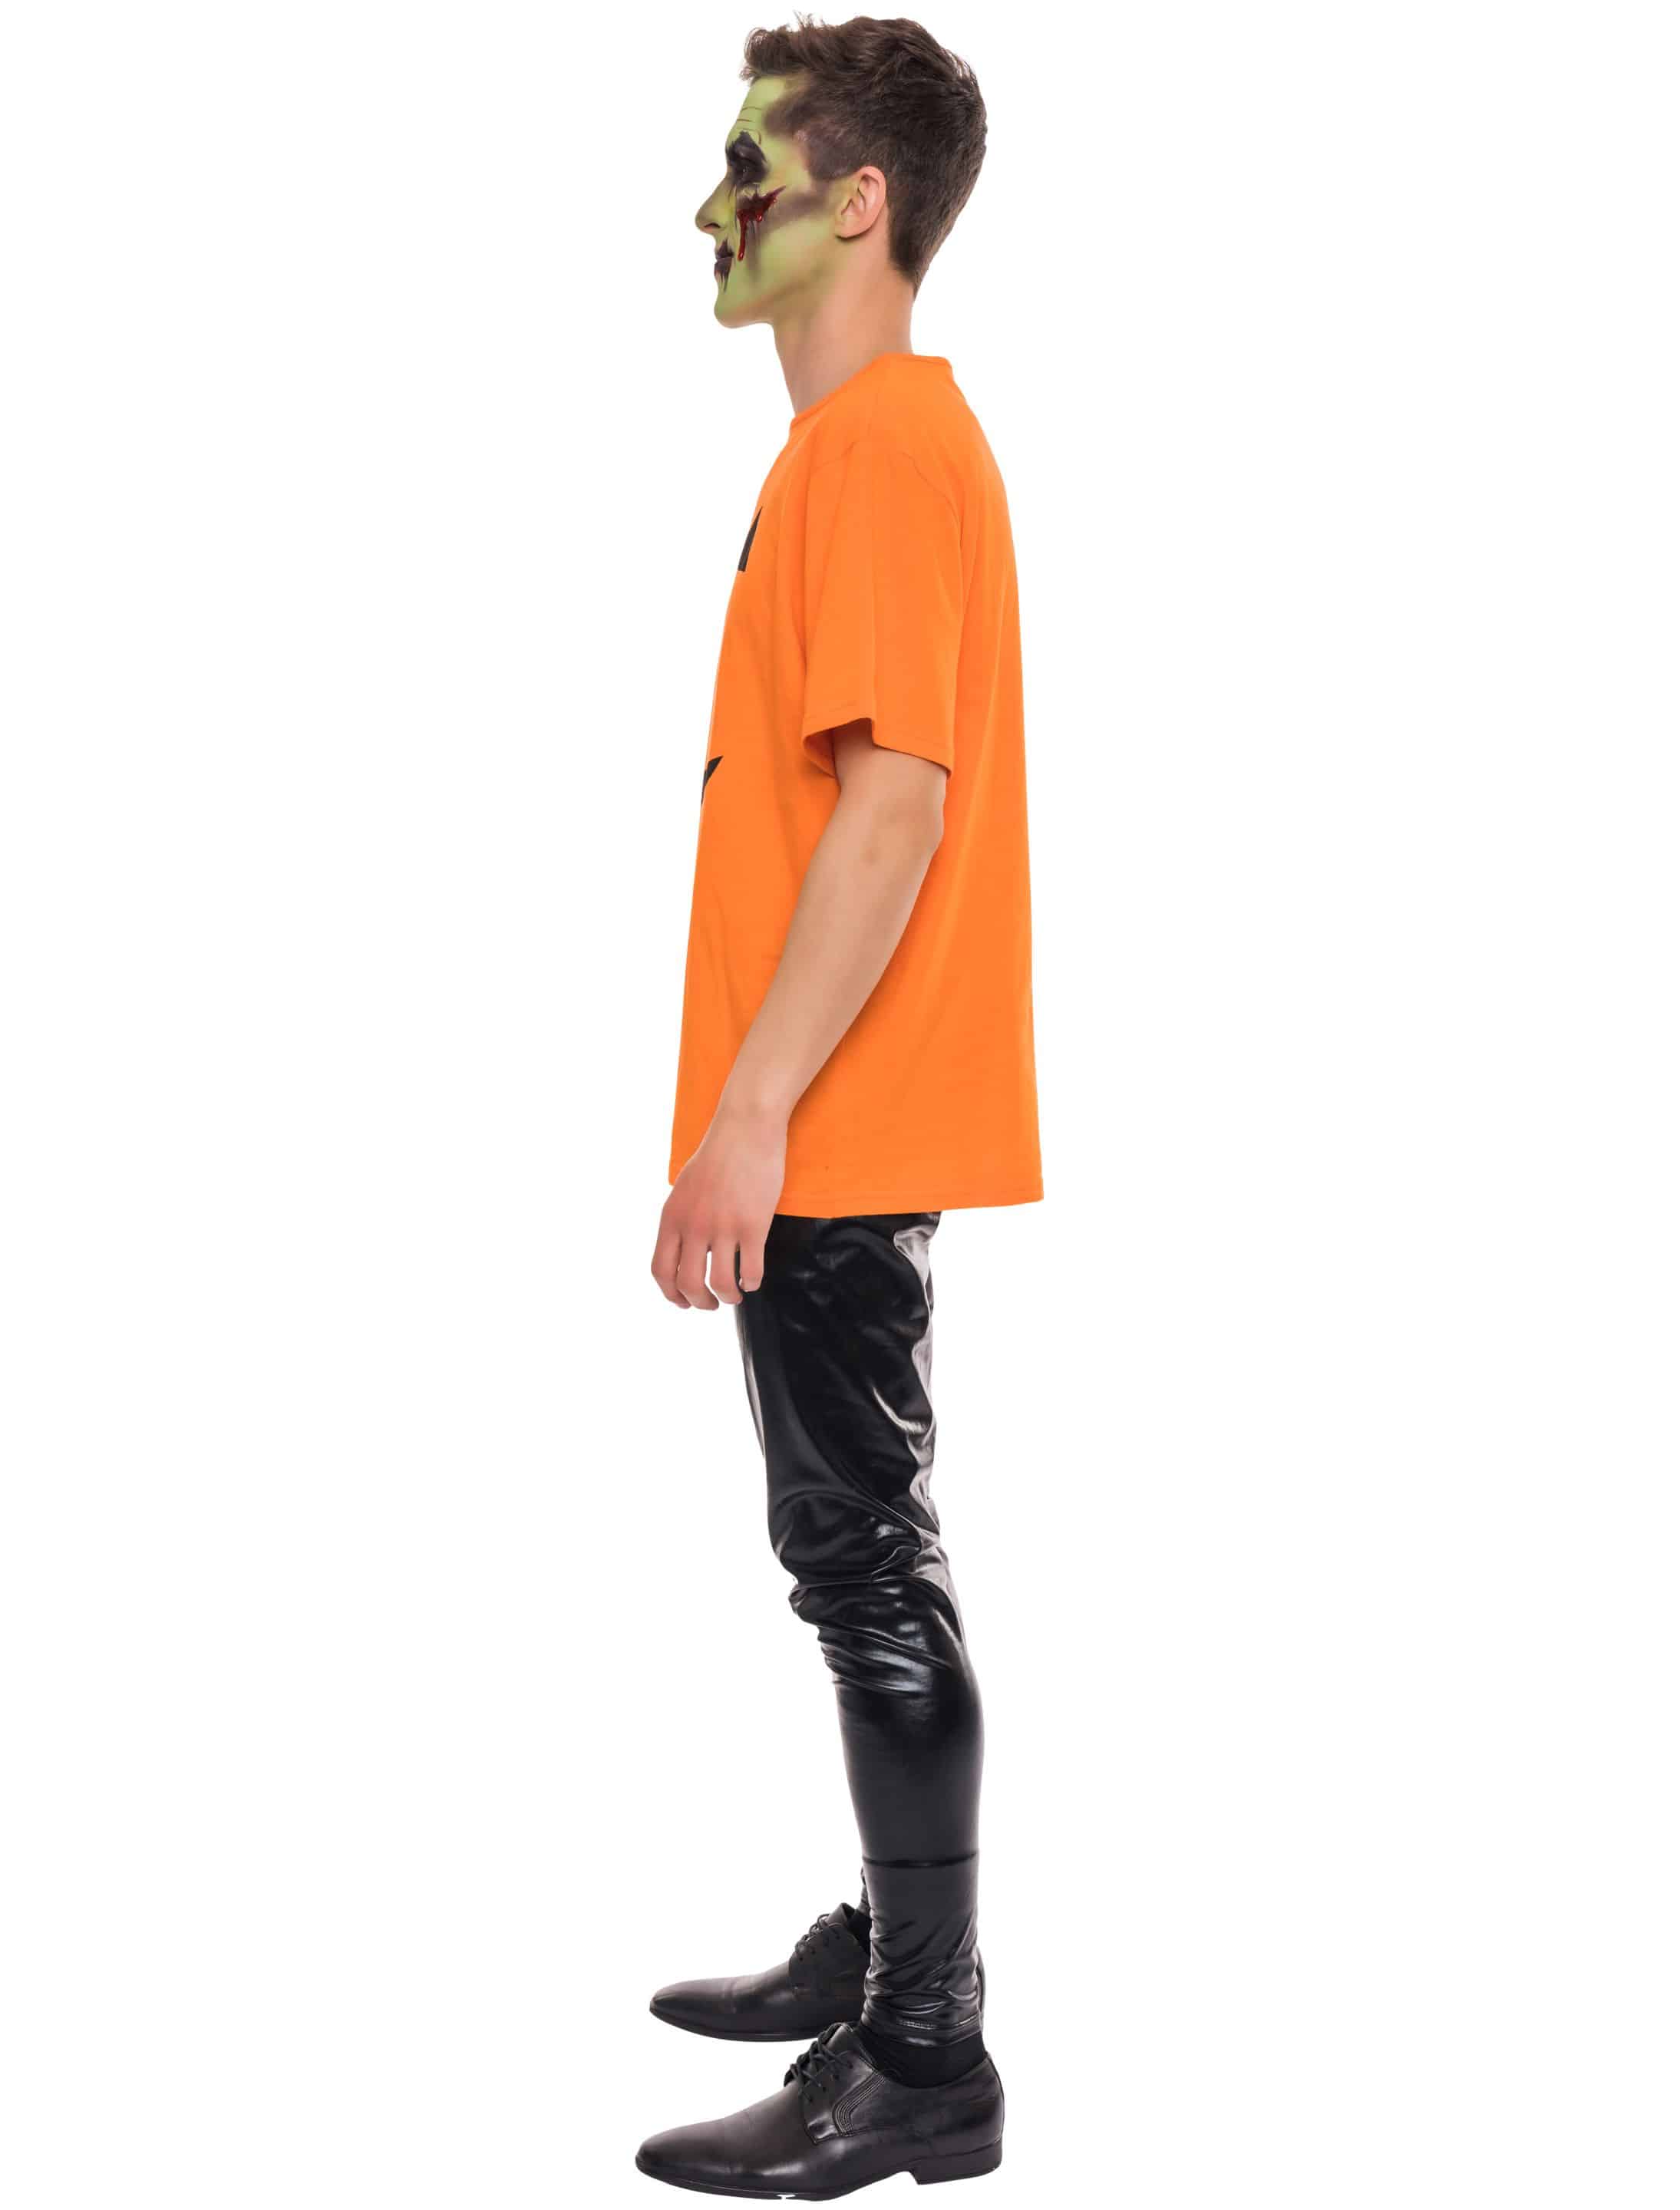 T-Shirt Halloween Kürbis orange 2XL/3XL